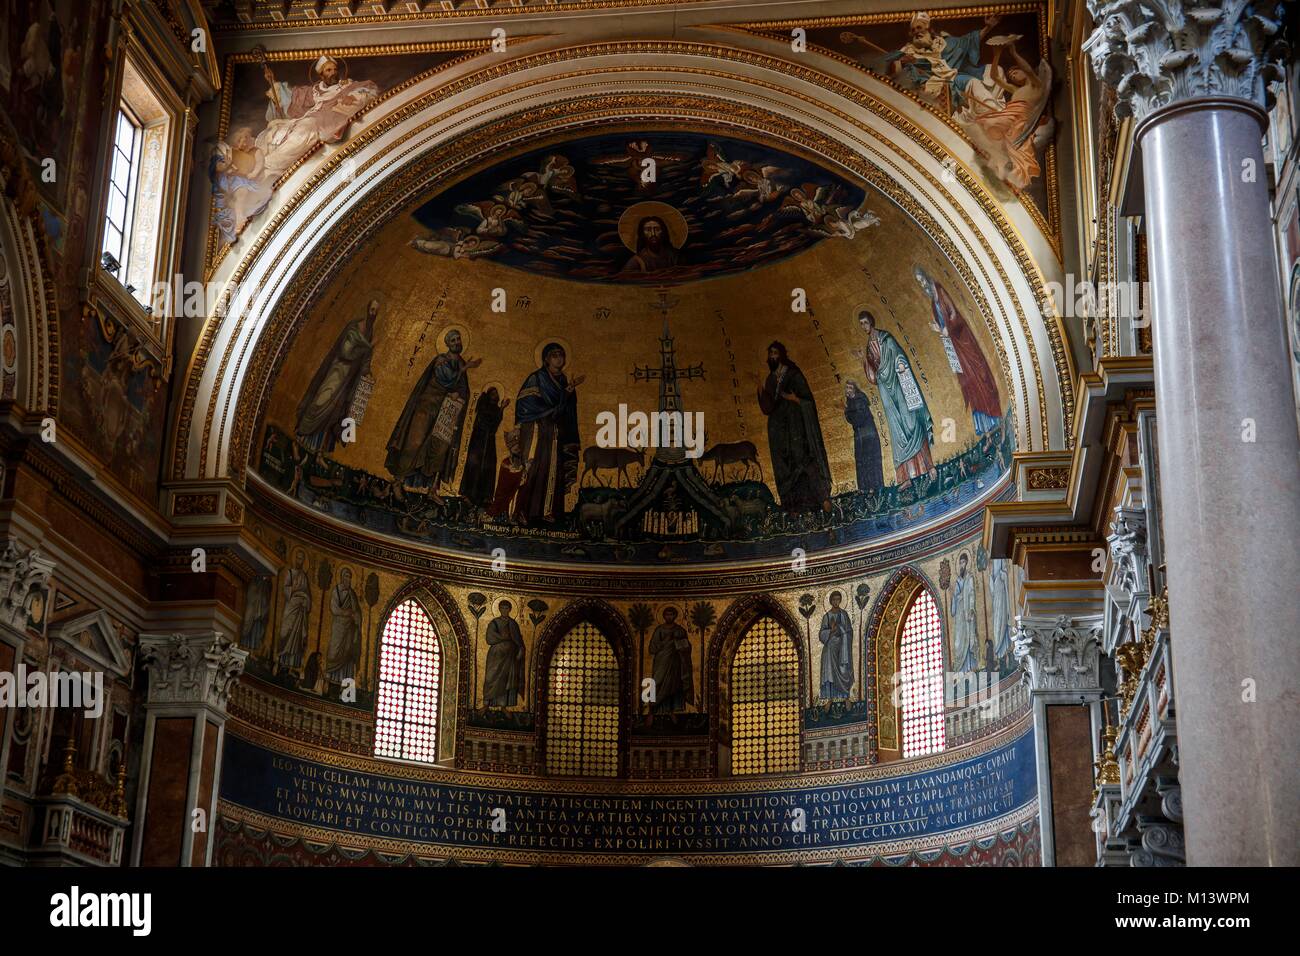 Italien, Latium, Rom, Altstadt zum Weltkulturerbe der UNESCO, in der Basilika San Giovanni in Laterano (Lateranbasilika), Apsis Mosaik Stockfoto